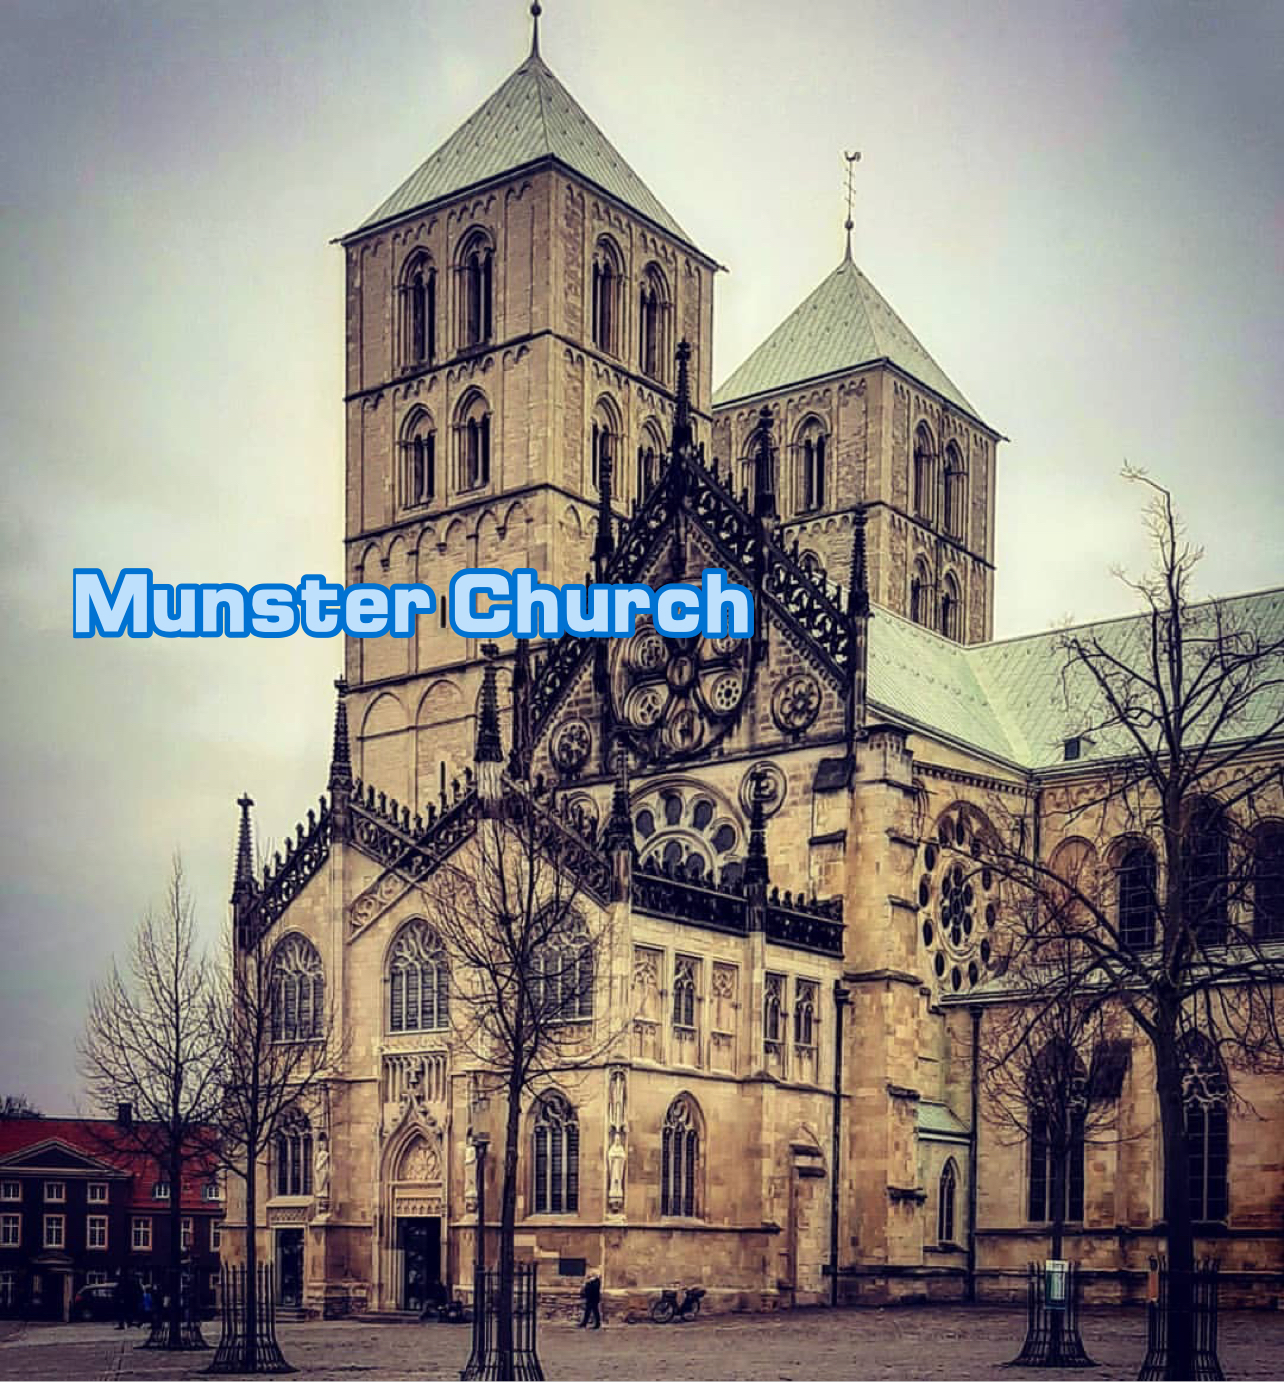 Munster Church